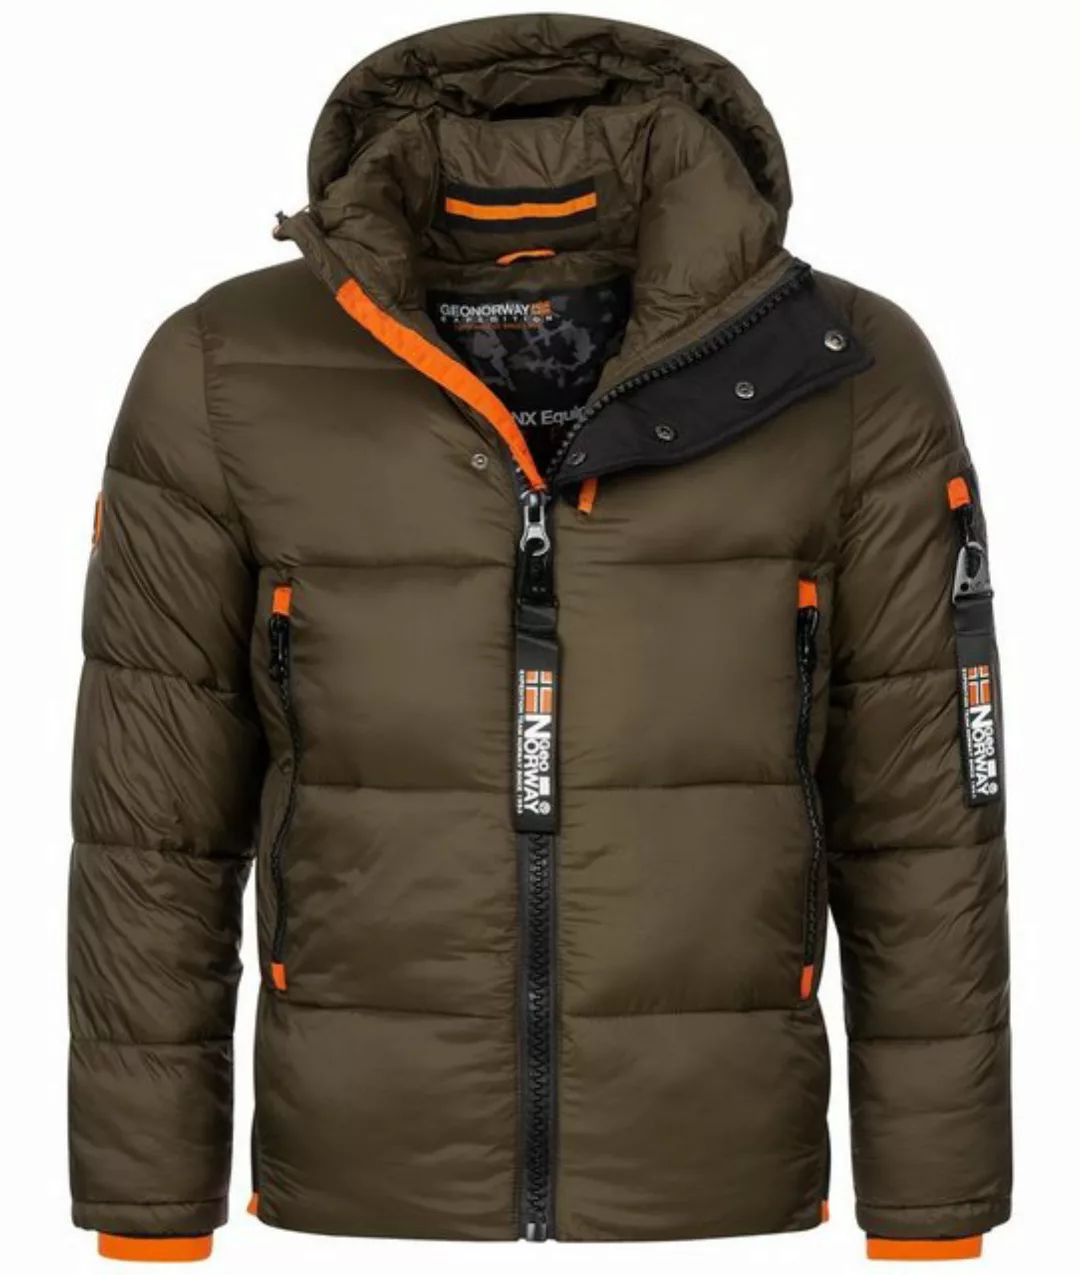 Geo Norway Winterjacke Herren Winter Jacke Steppjacke H-300 günstig online kaufen